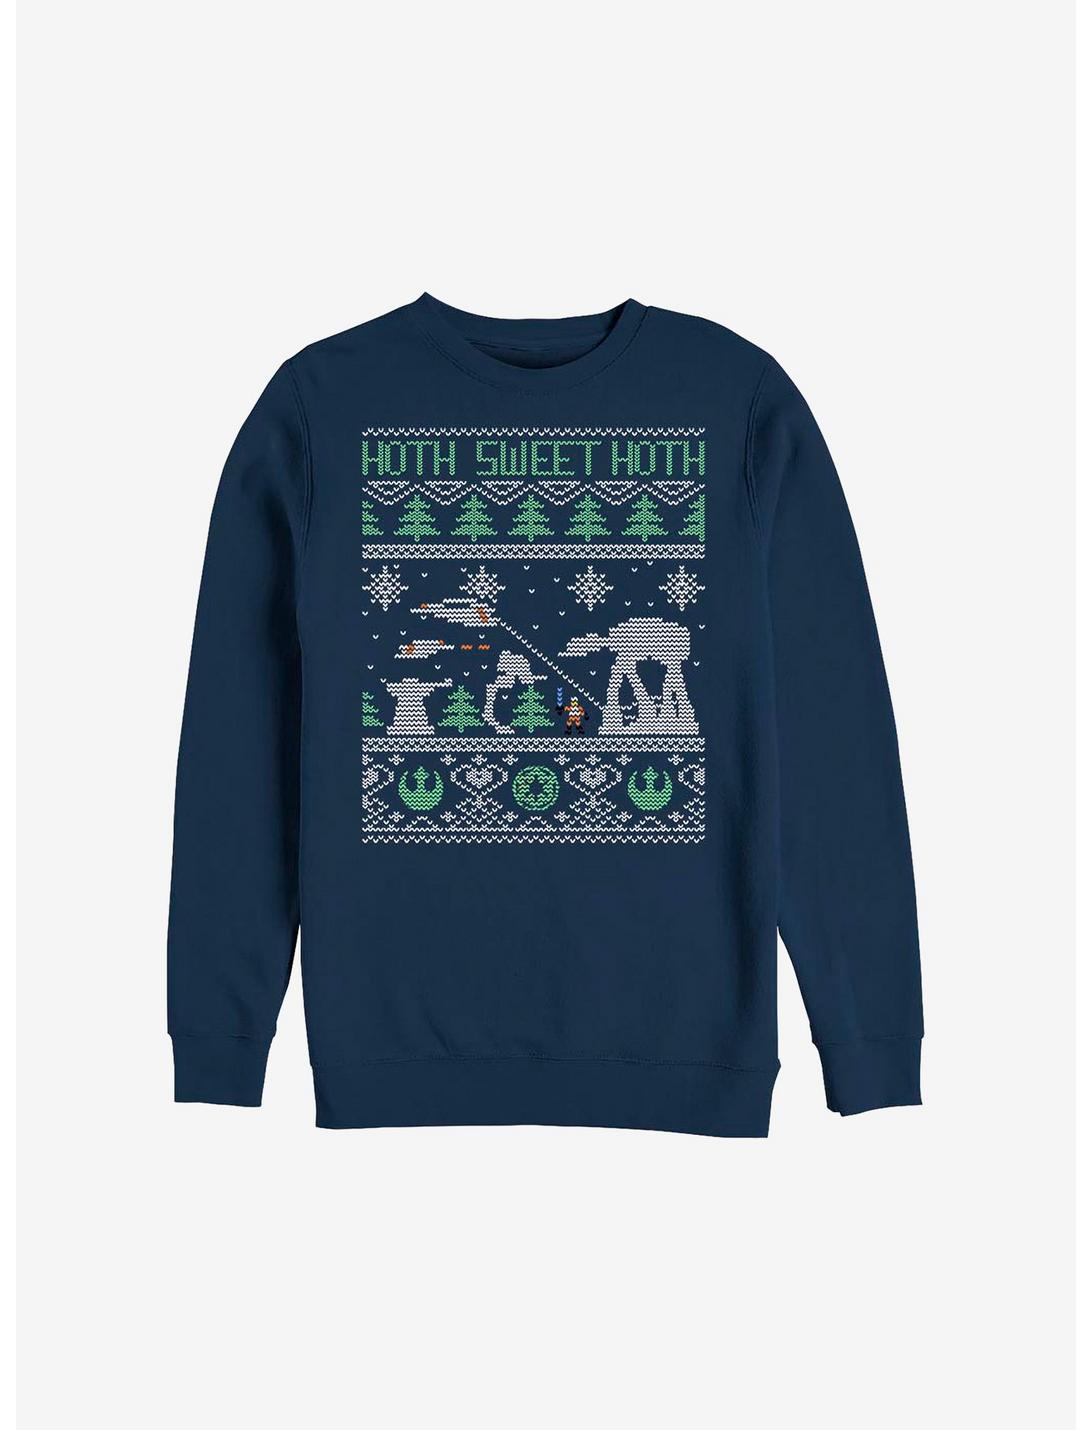 Star Wars Hoth Sweet Hoth Holiday Battle Christmas Ugly Sweater Sweatshirt, NAVY, hi-res